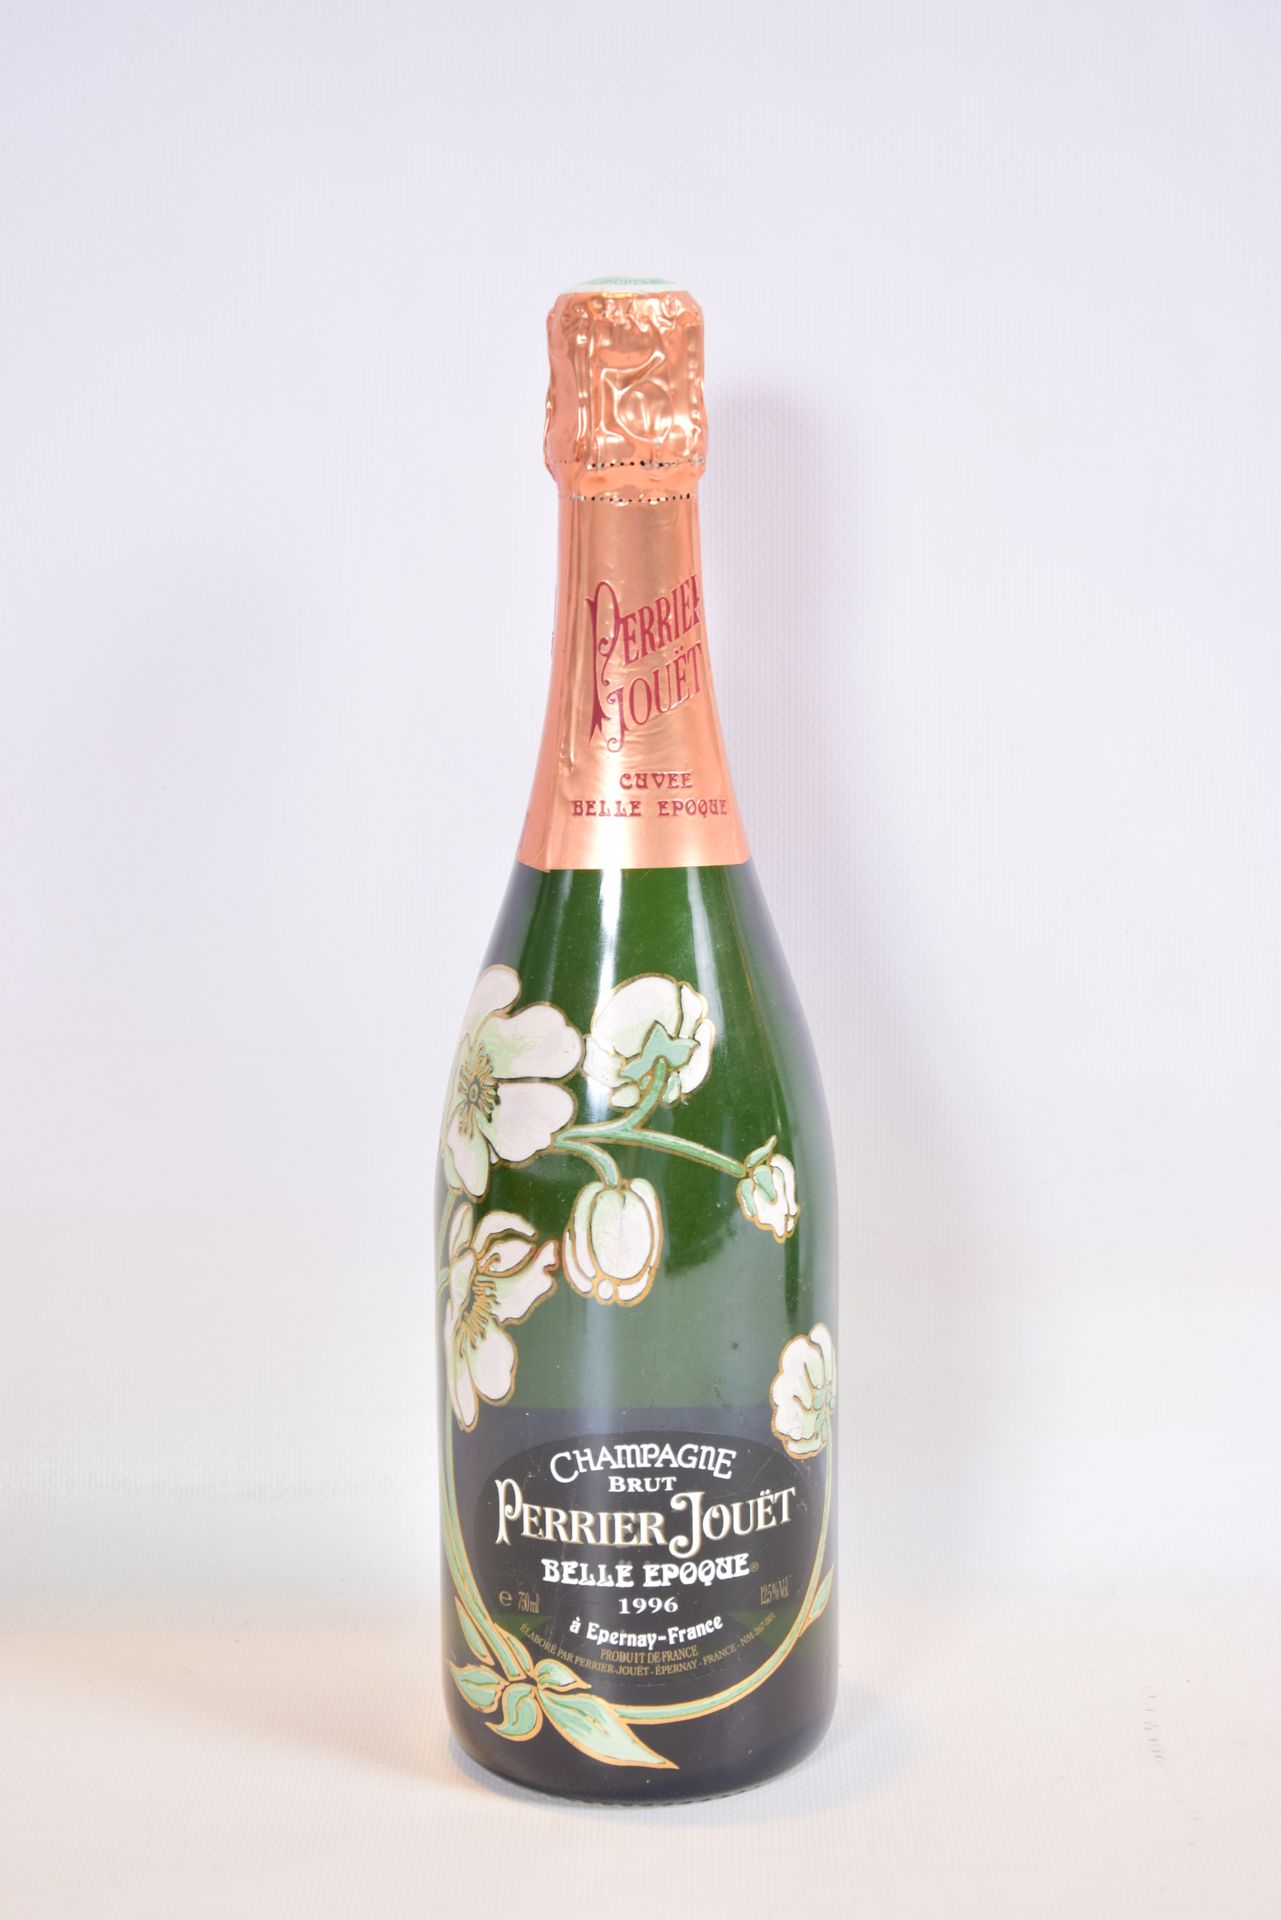 Null 1 Blle Champagne PERRIER JOUËT Belle Epoque Brut 1996

	Presentation and le&hellip;